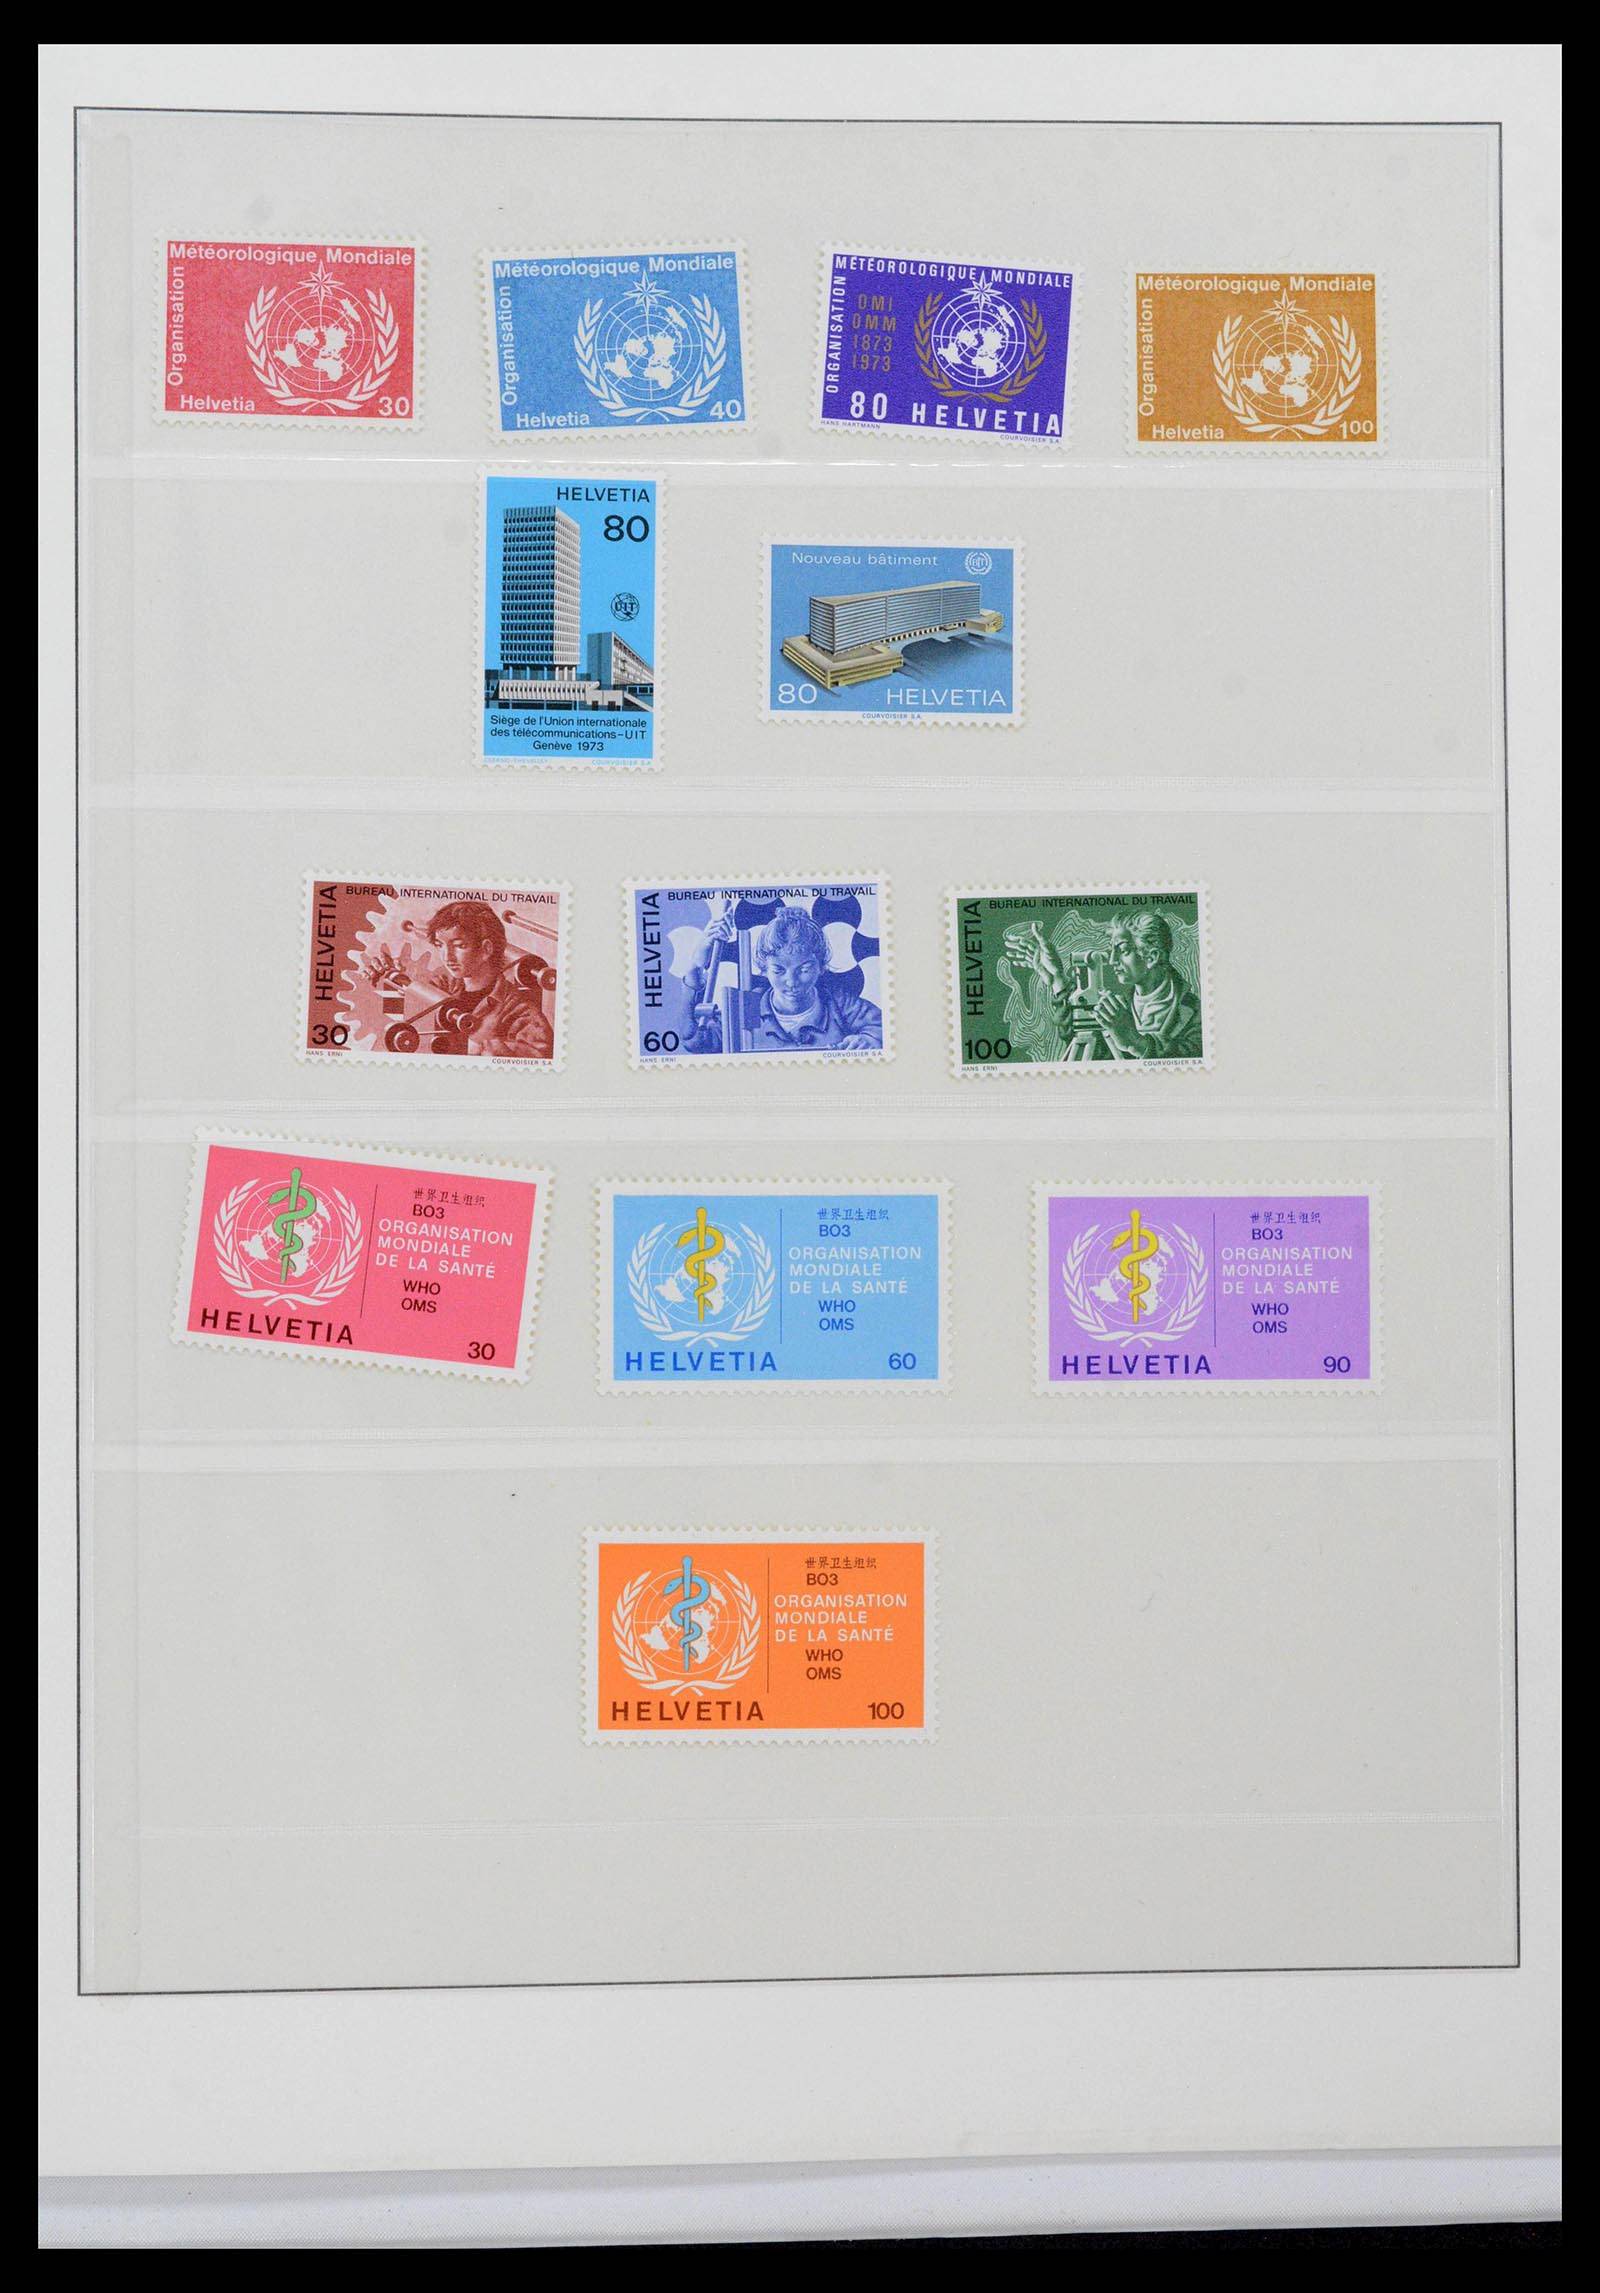 39235 0088 - Stamp collection 39235 Switzerland 1843-1960.